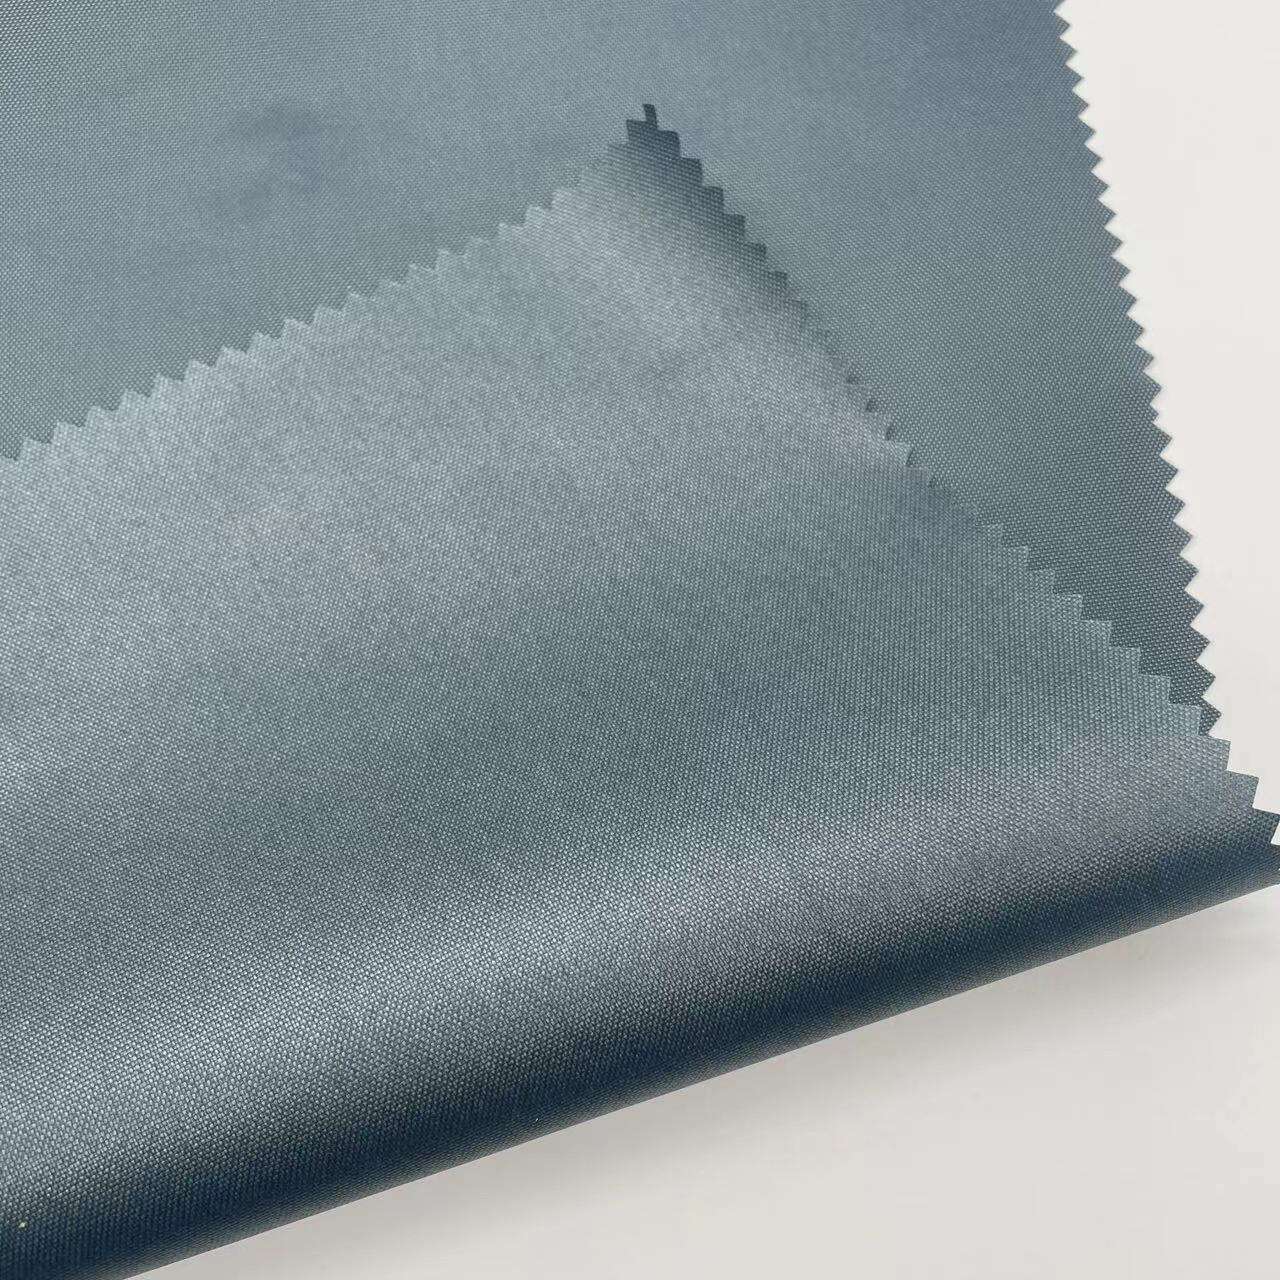 Waterproof PU coating 210D nylon oxford fabric